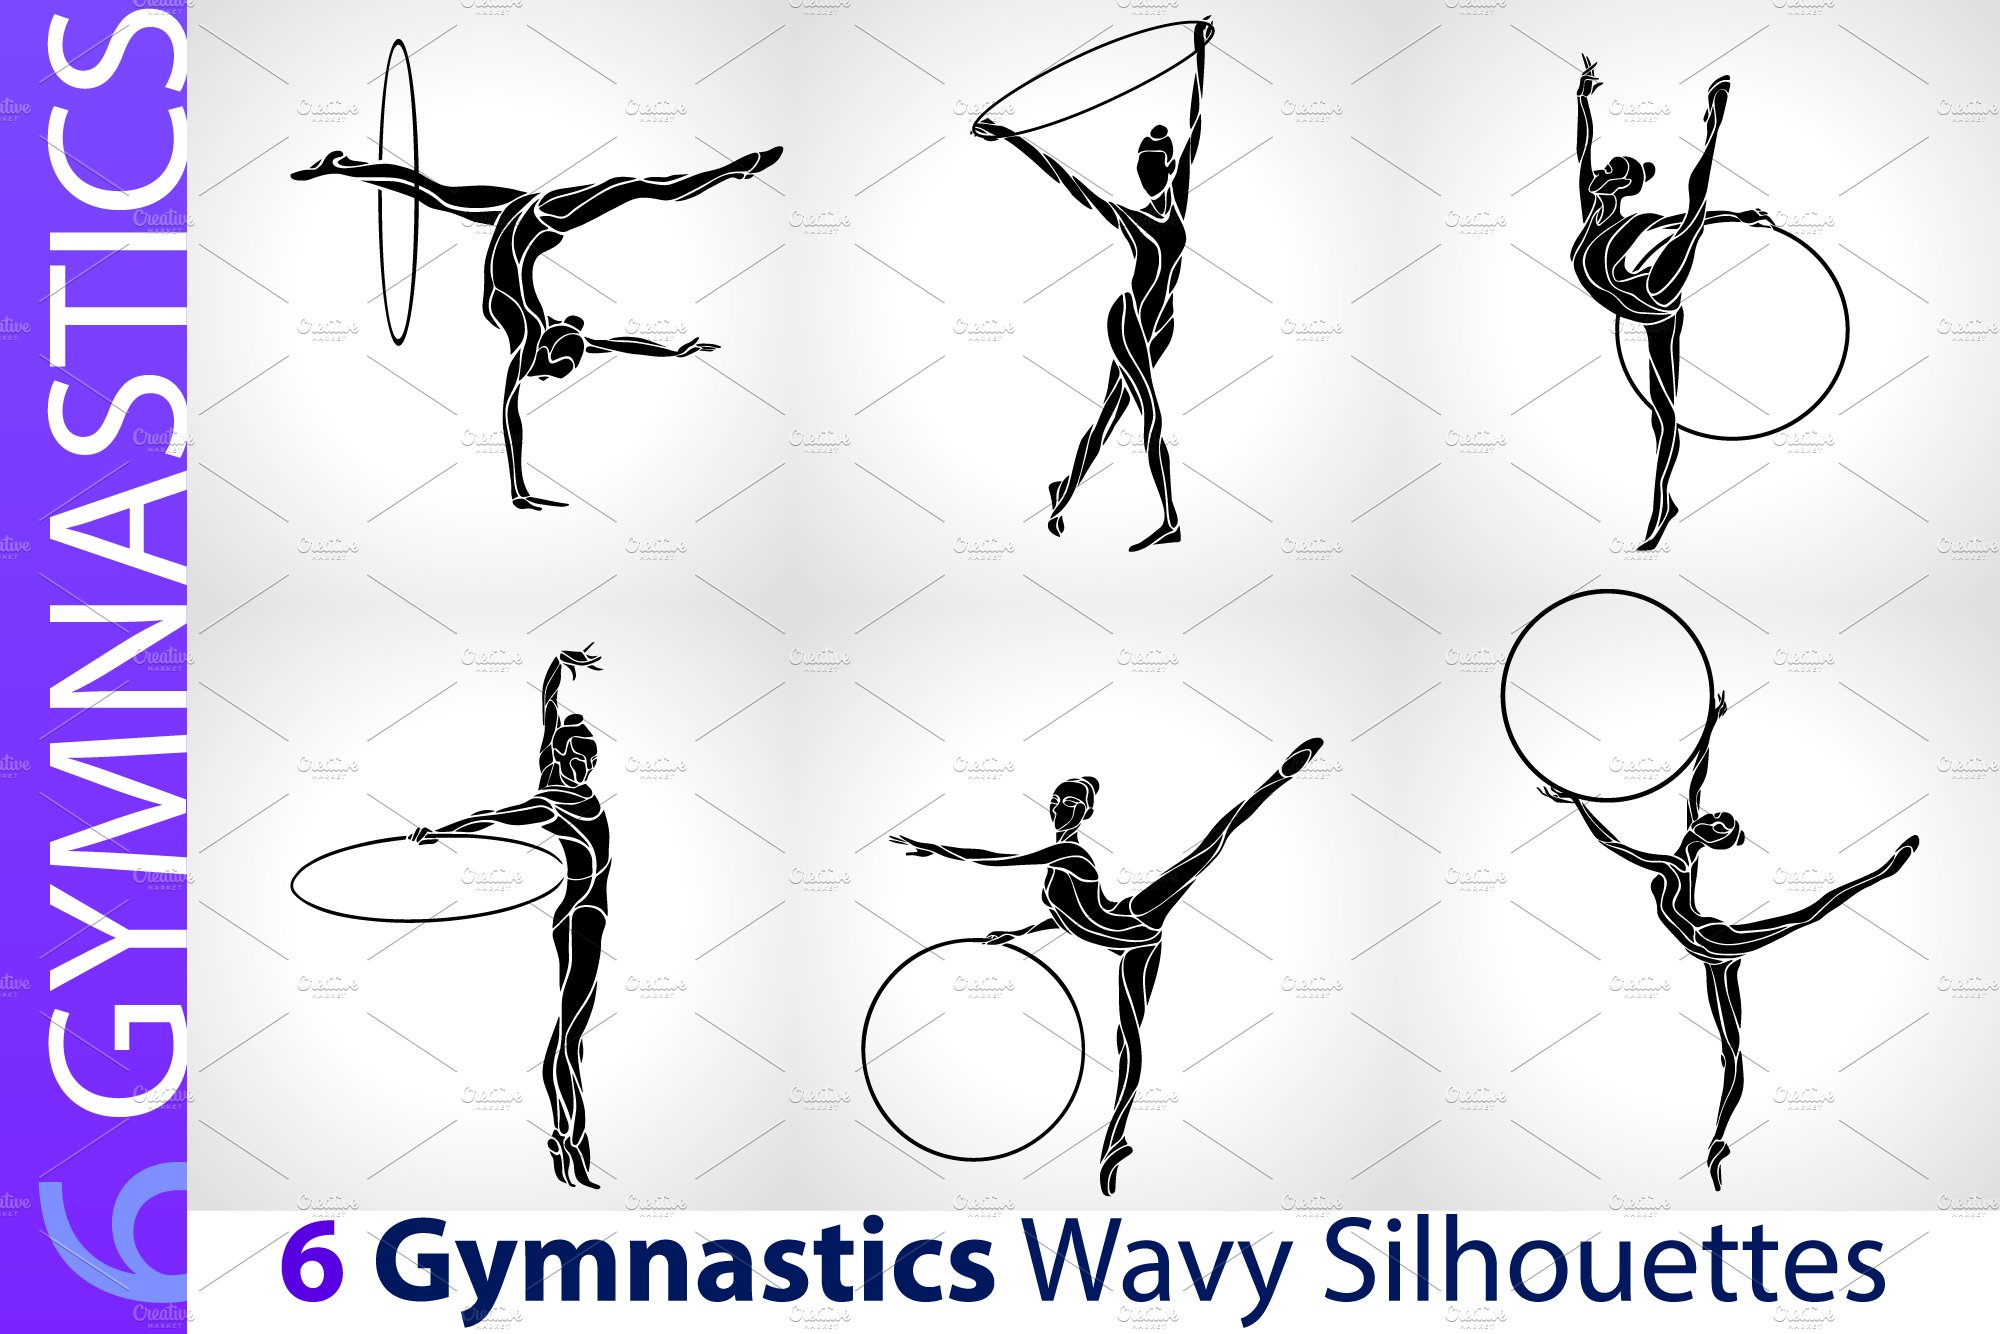 Rhythmic Gymnastics with Hoop set cover image.